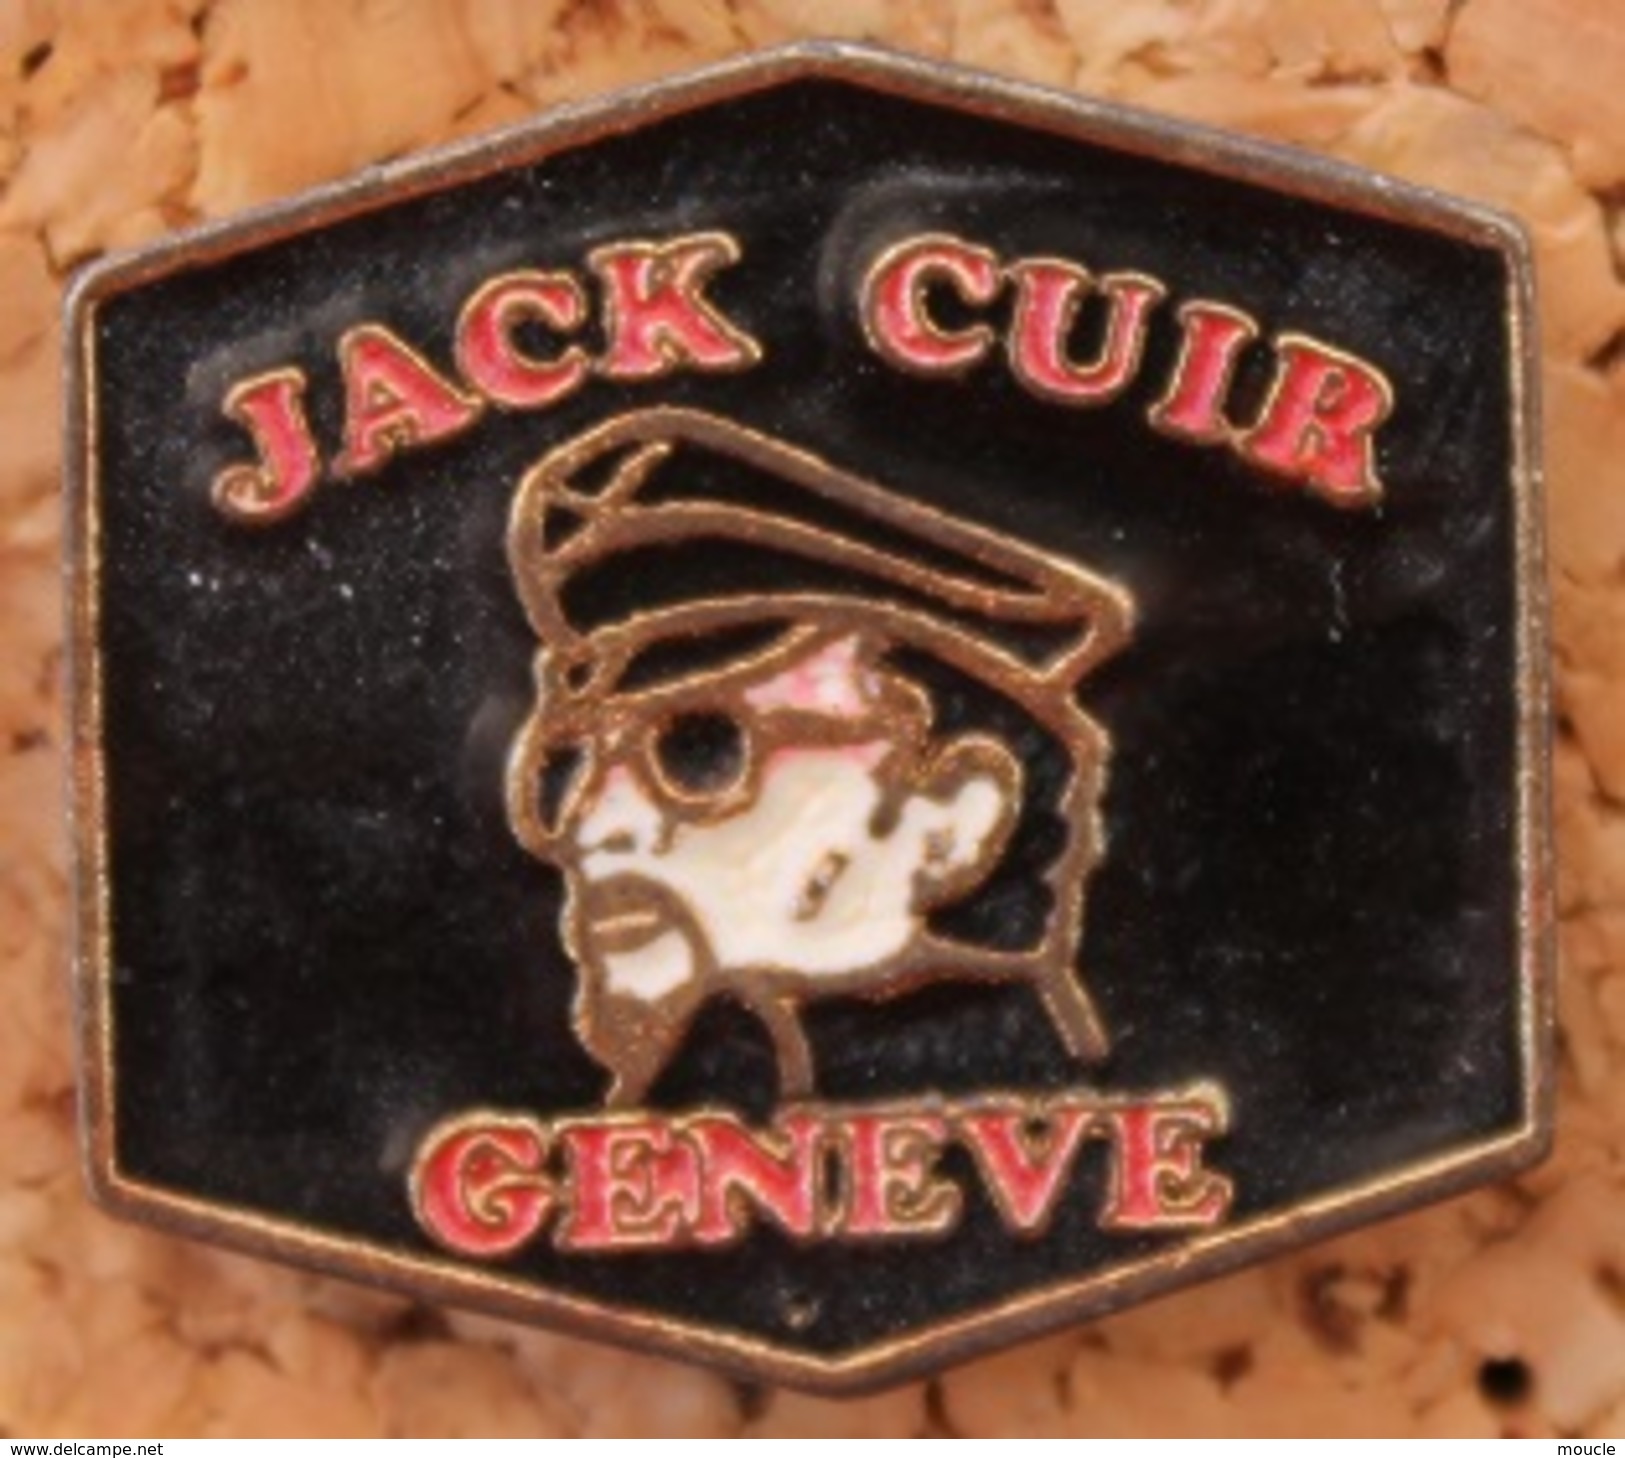 JACK CUIR GENEVE - CASQUETTE   -     (13) - Motos